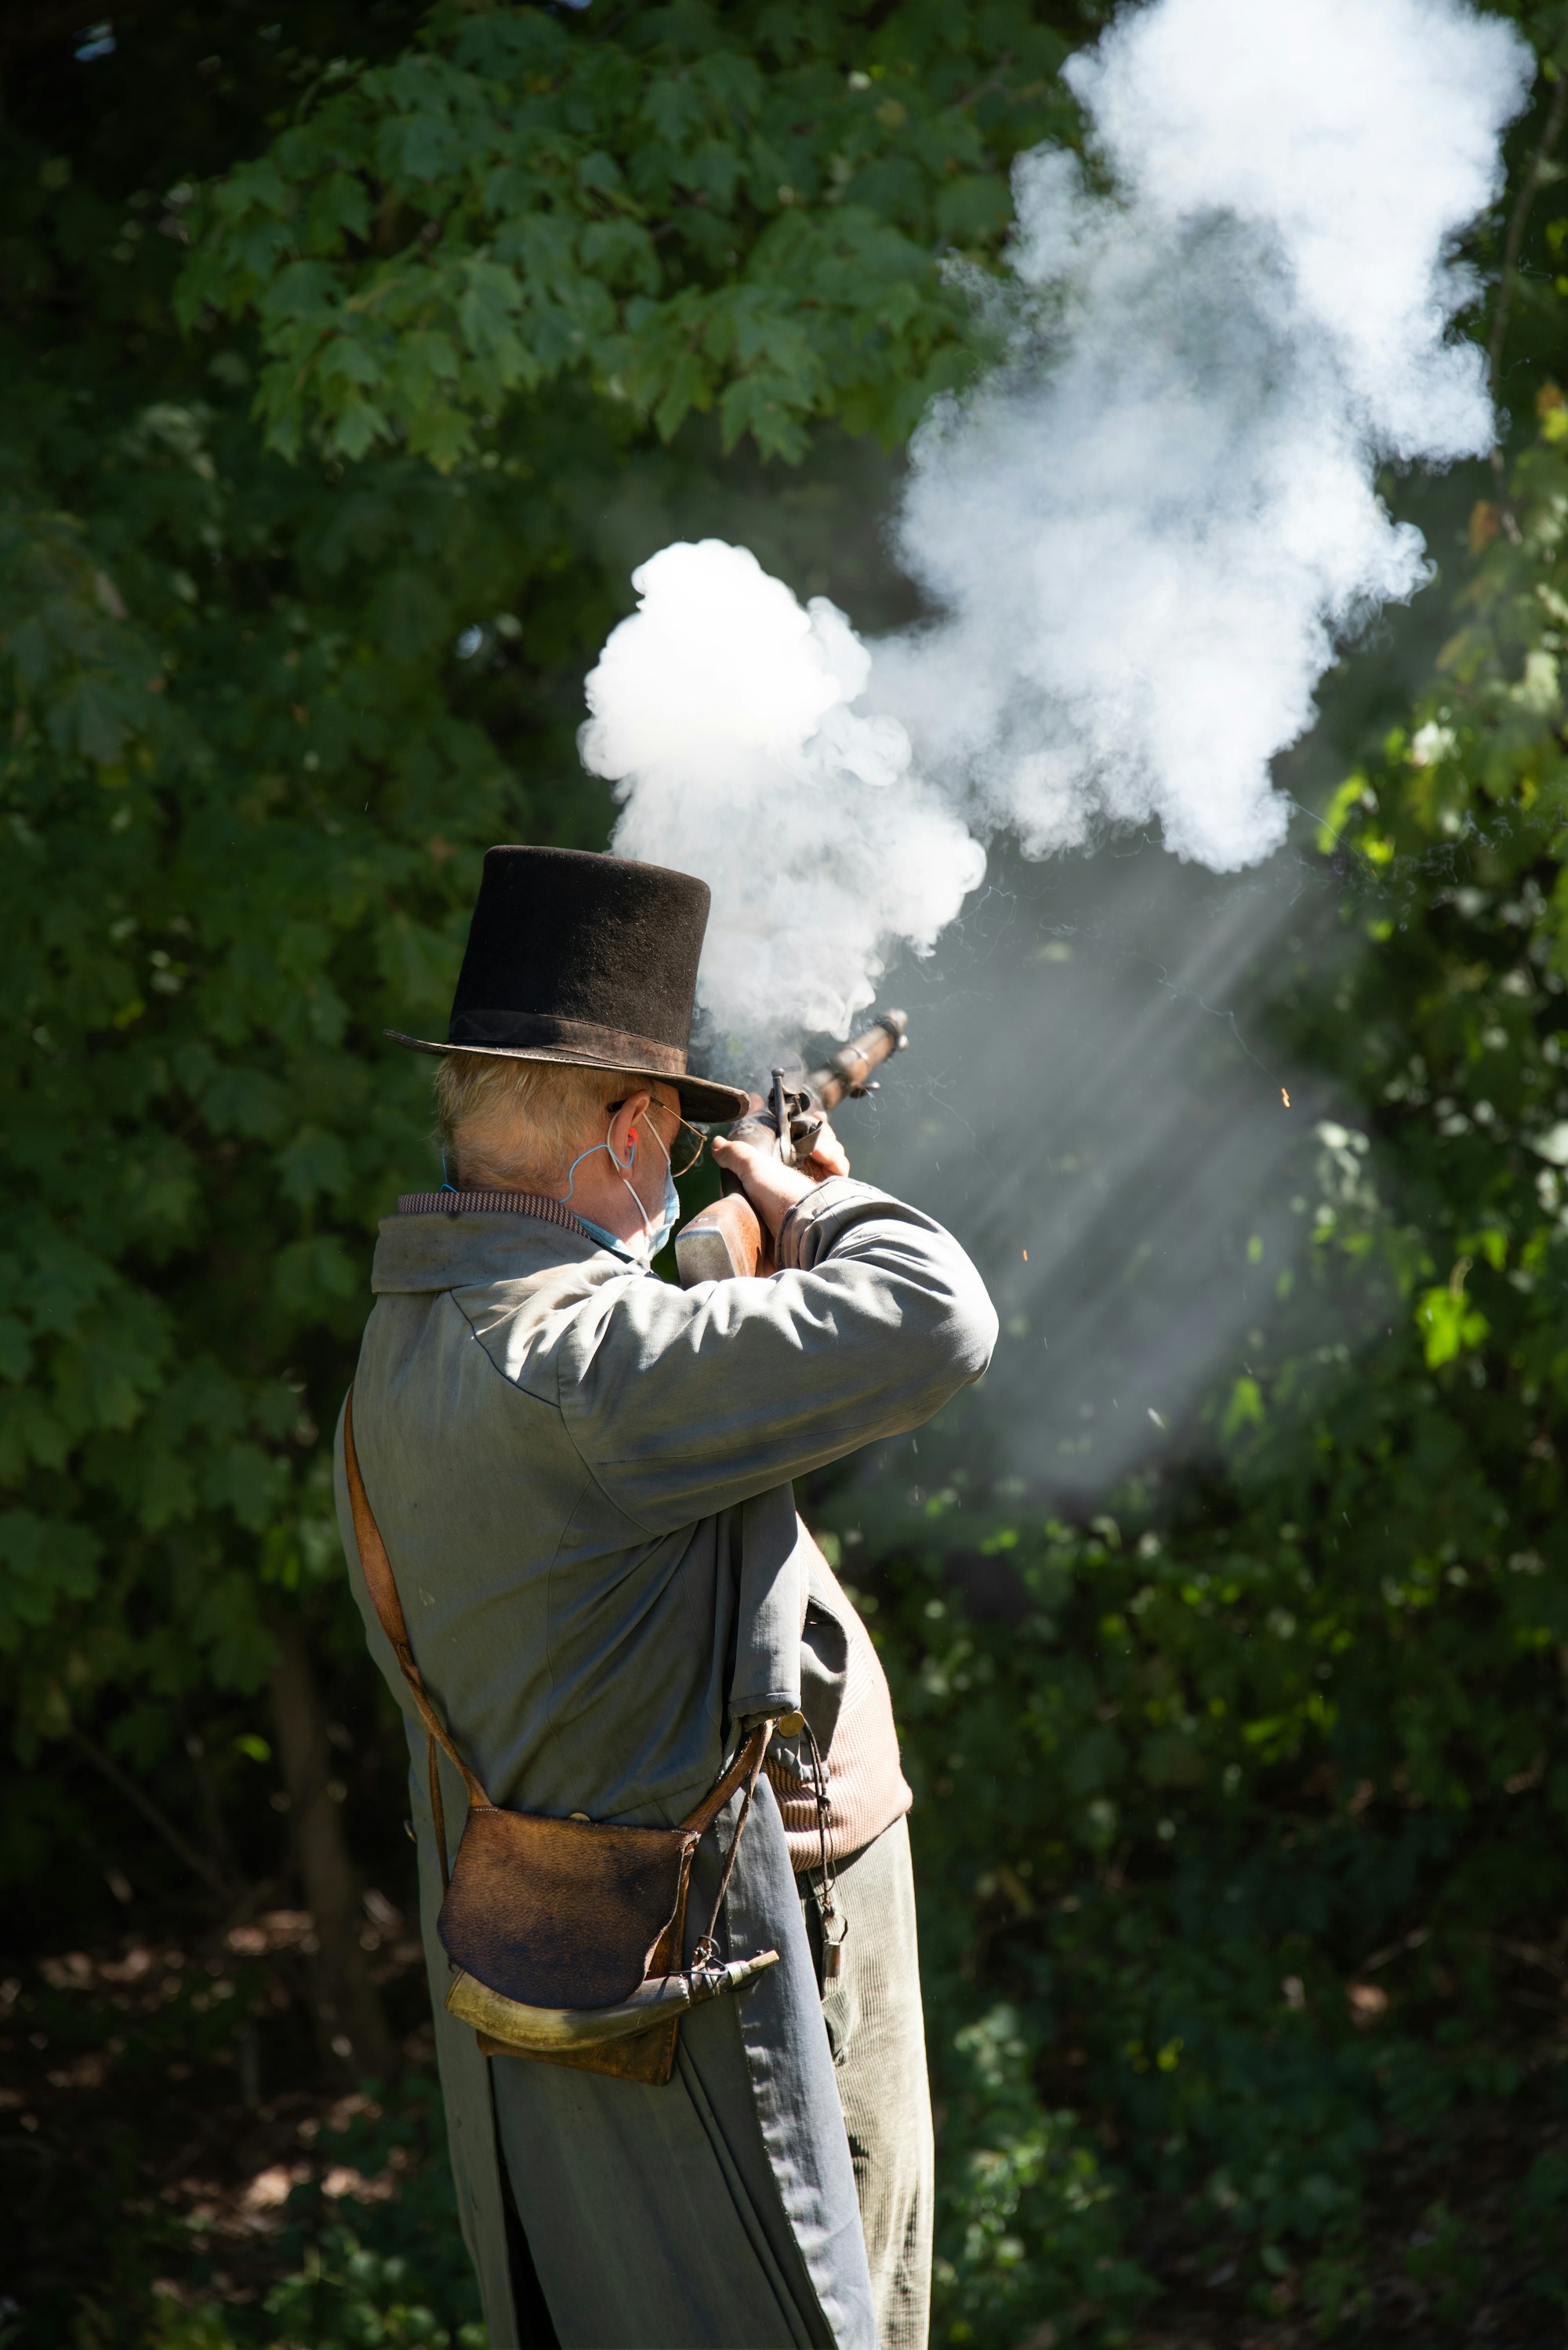 Musket firing demonstration at Old Sturbridge Village, Sturbridge, Massachusetts, USA.